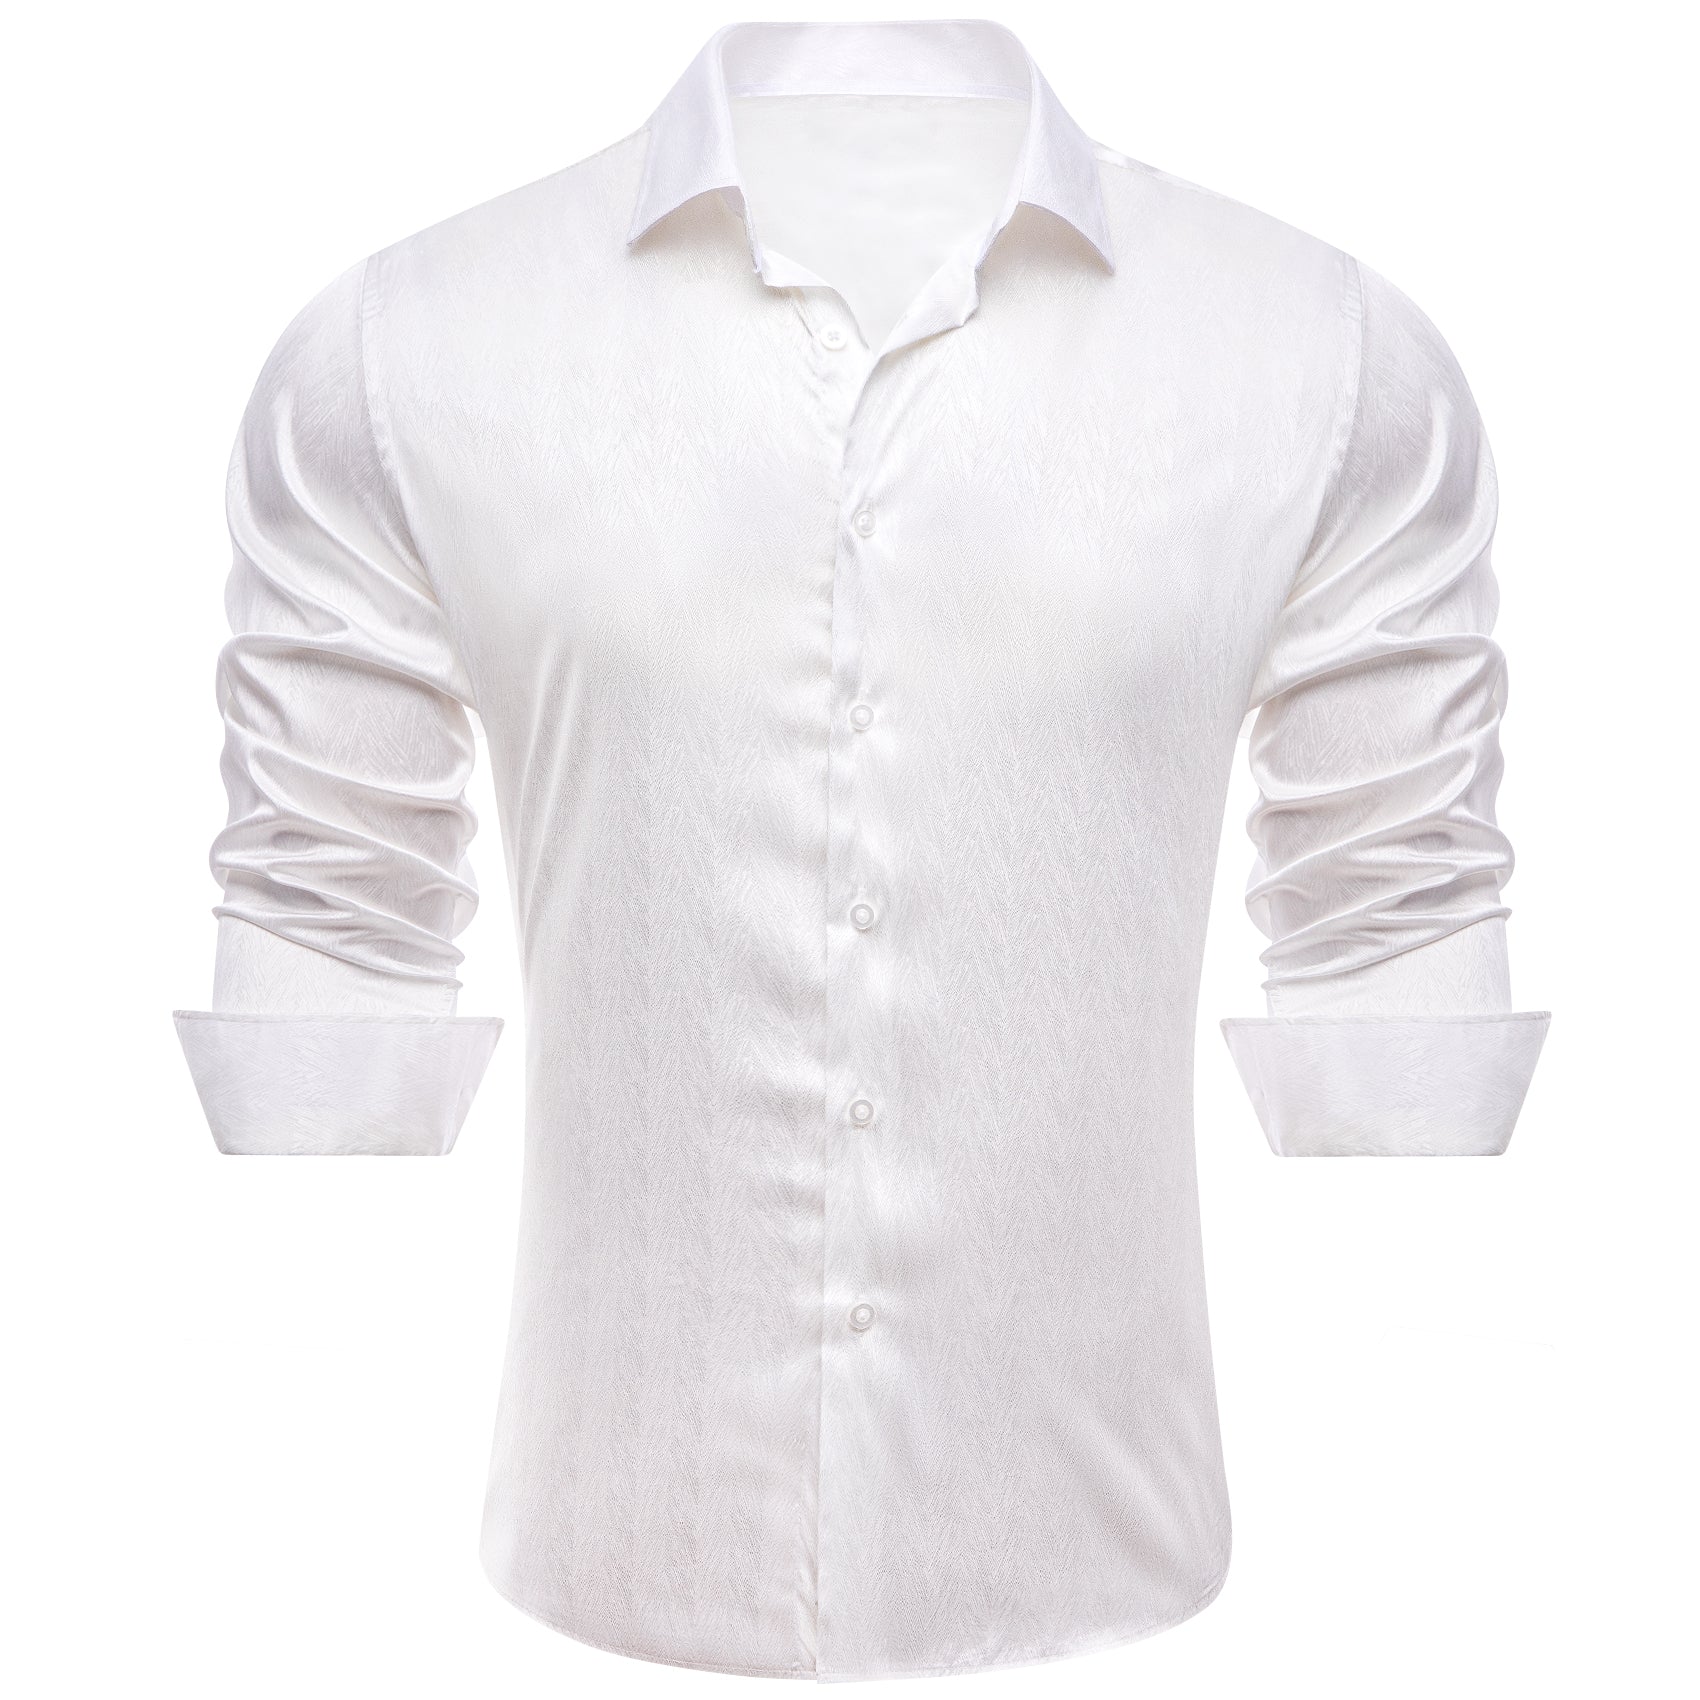 Barry.wang White Solid Silk Men's Shirt